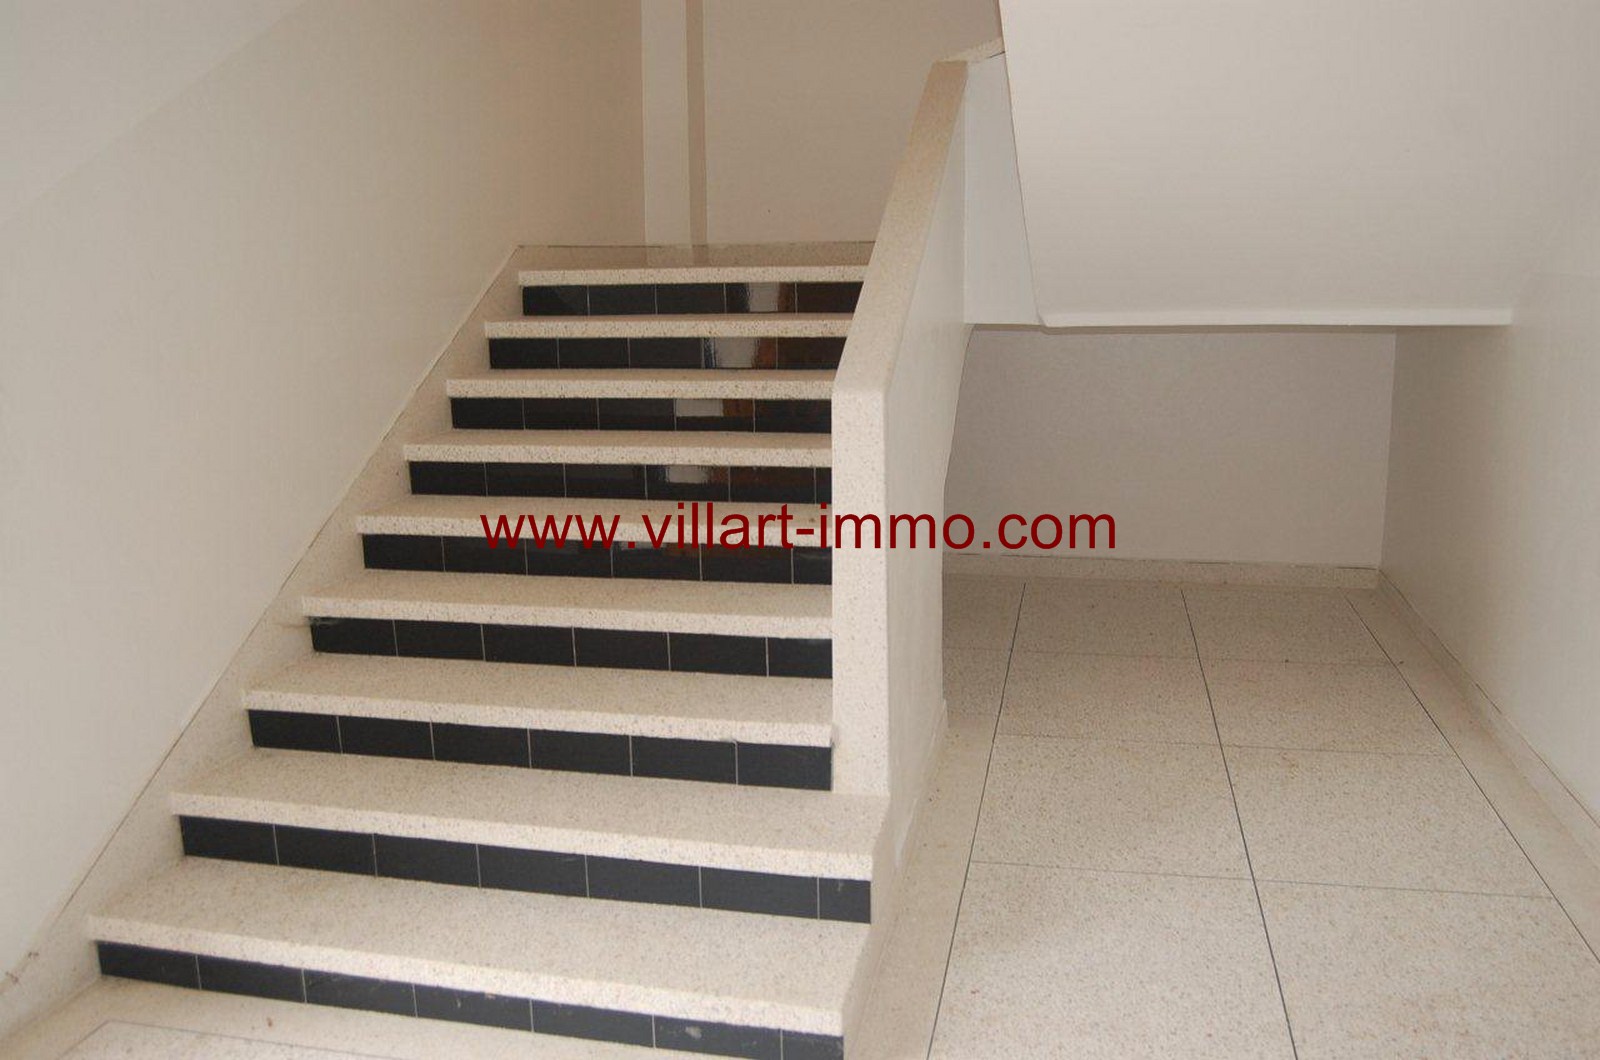 5-vente-usine-tanger-escaliers-vlc396-villart-immo